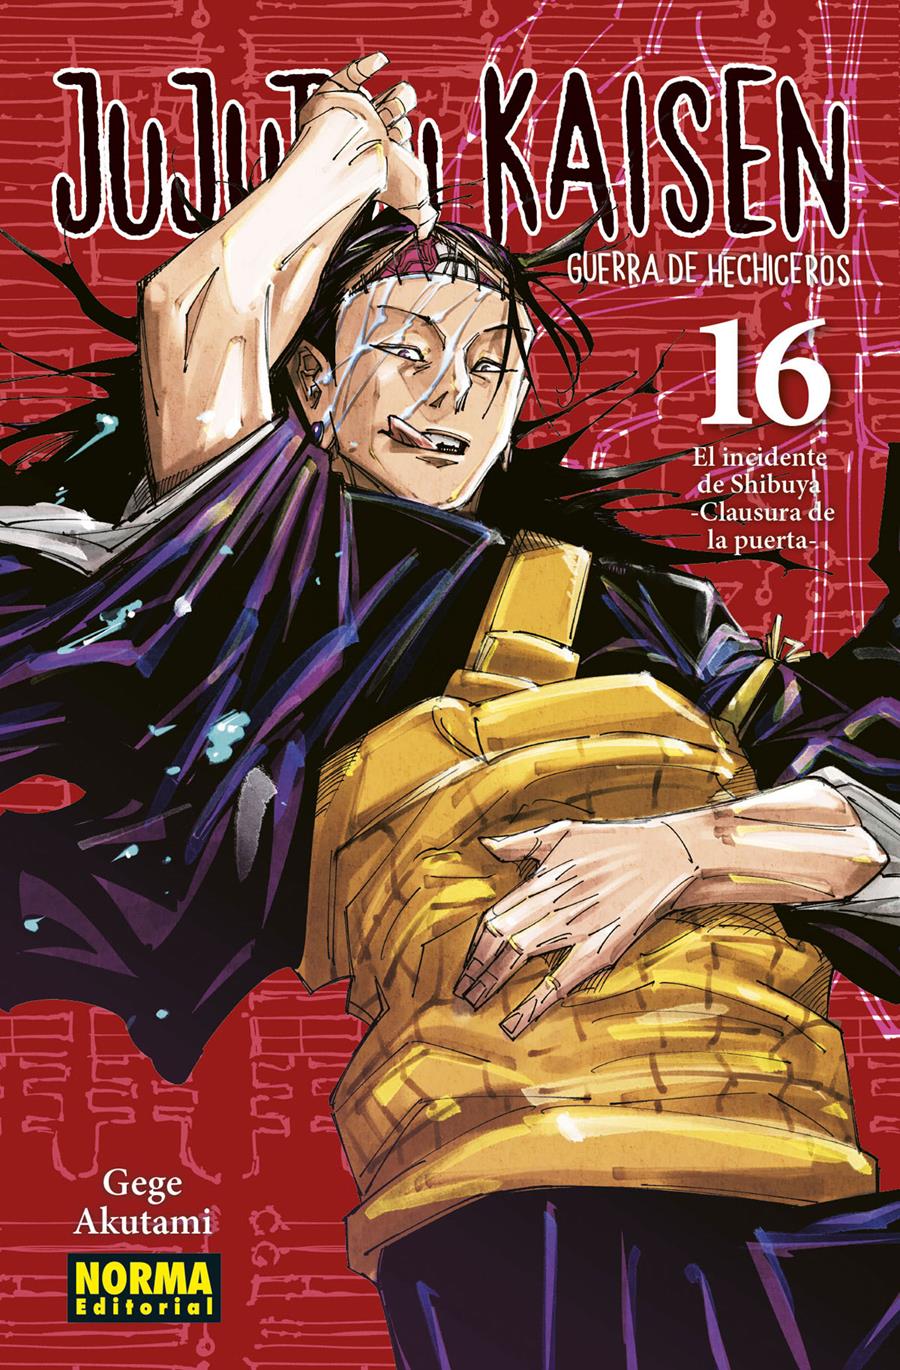 Jujutsu Kaisen 16 | N0422-NOR22 | Gege Akutami | Terra de Còmic - Tu tienda de cómics online especializada en cómics, manga y merchandising